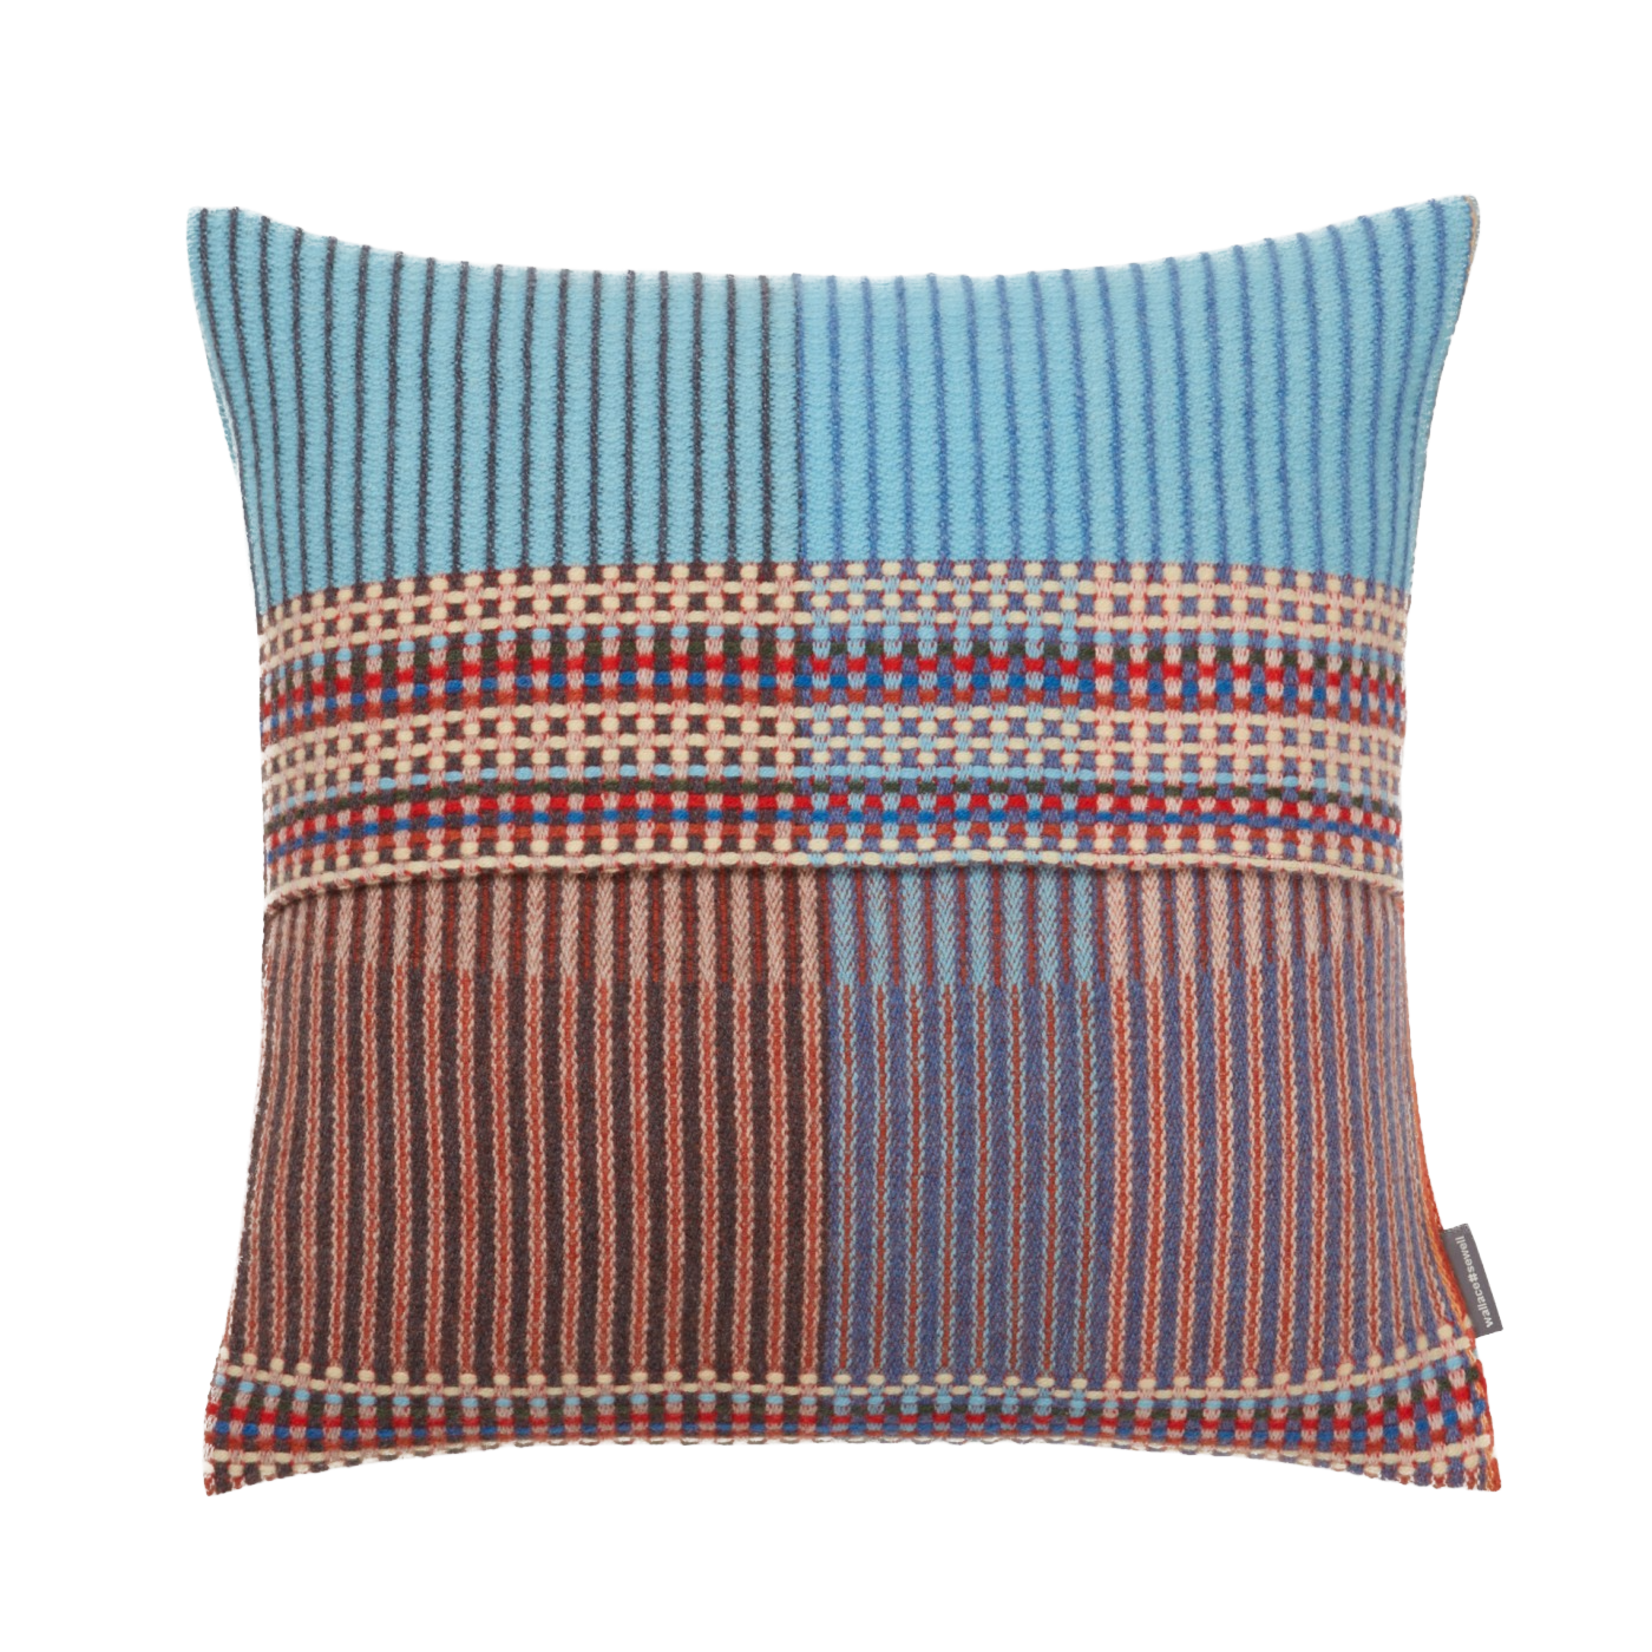 Wallace Sewell W&S Beatrix Pinstripe Orange & Blue Cushion 18 x 18